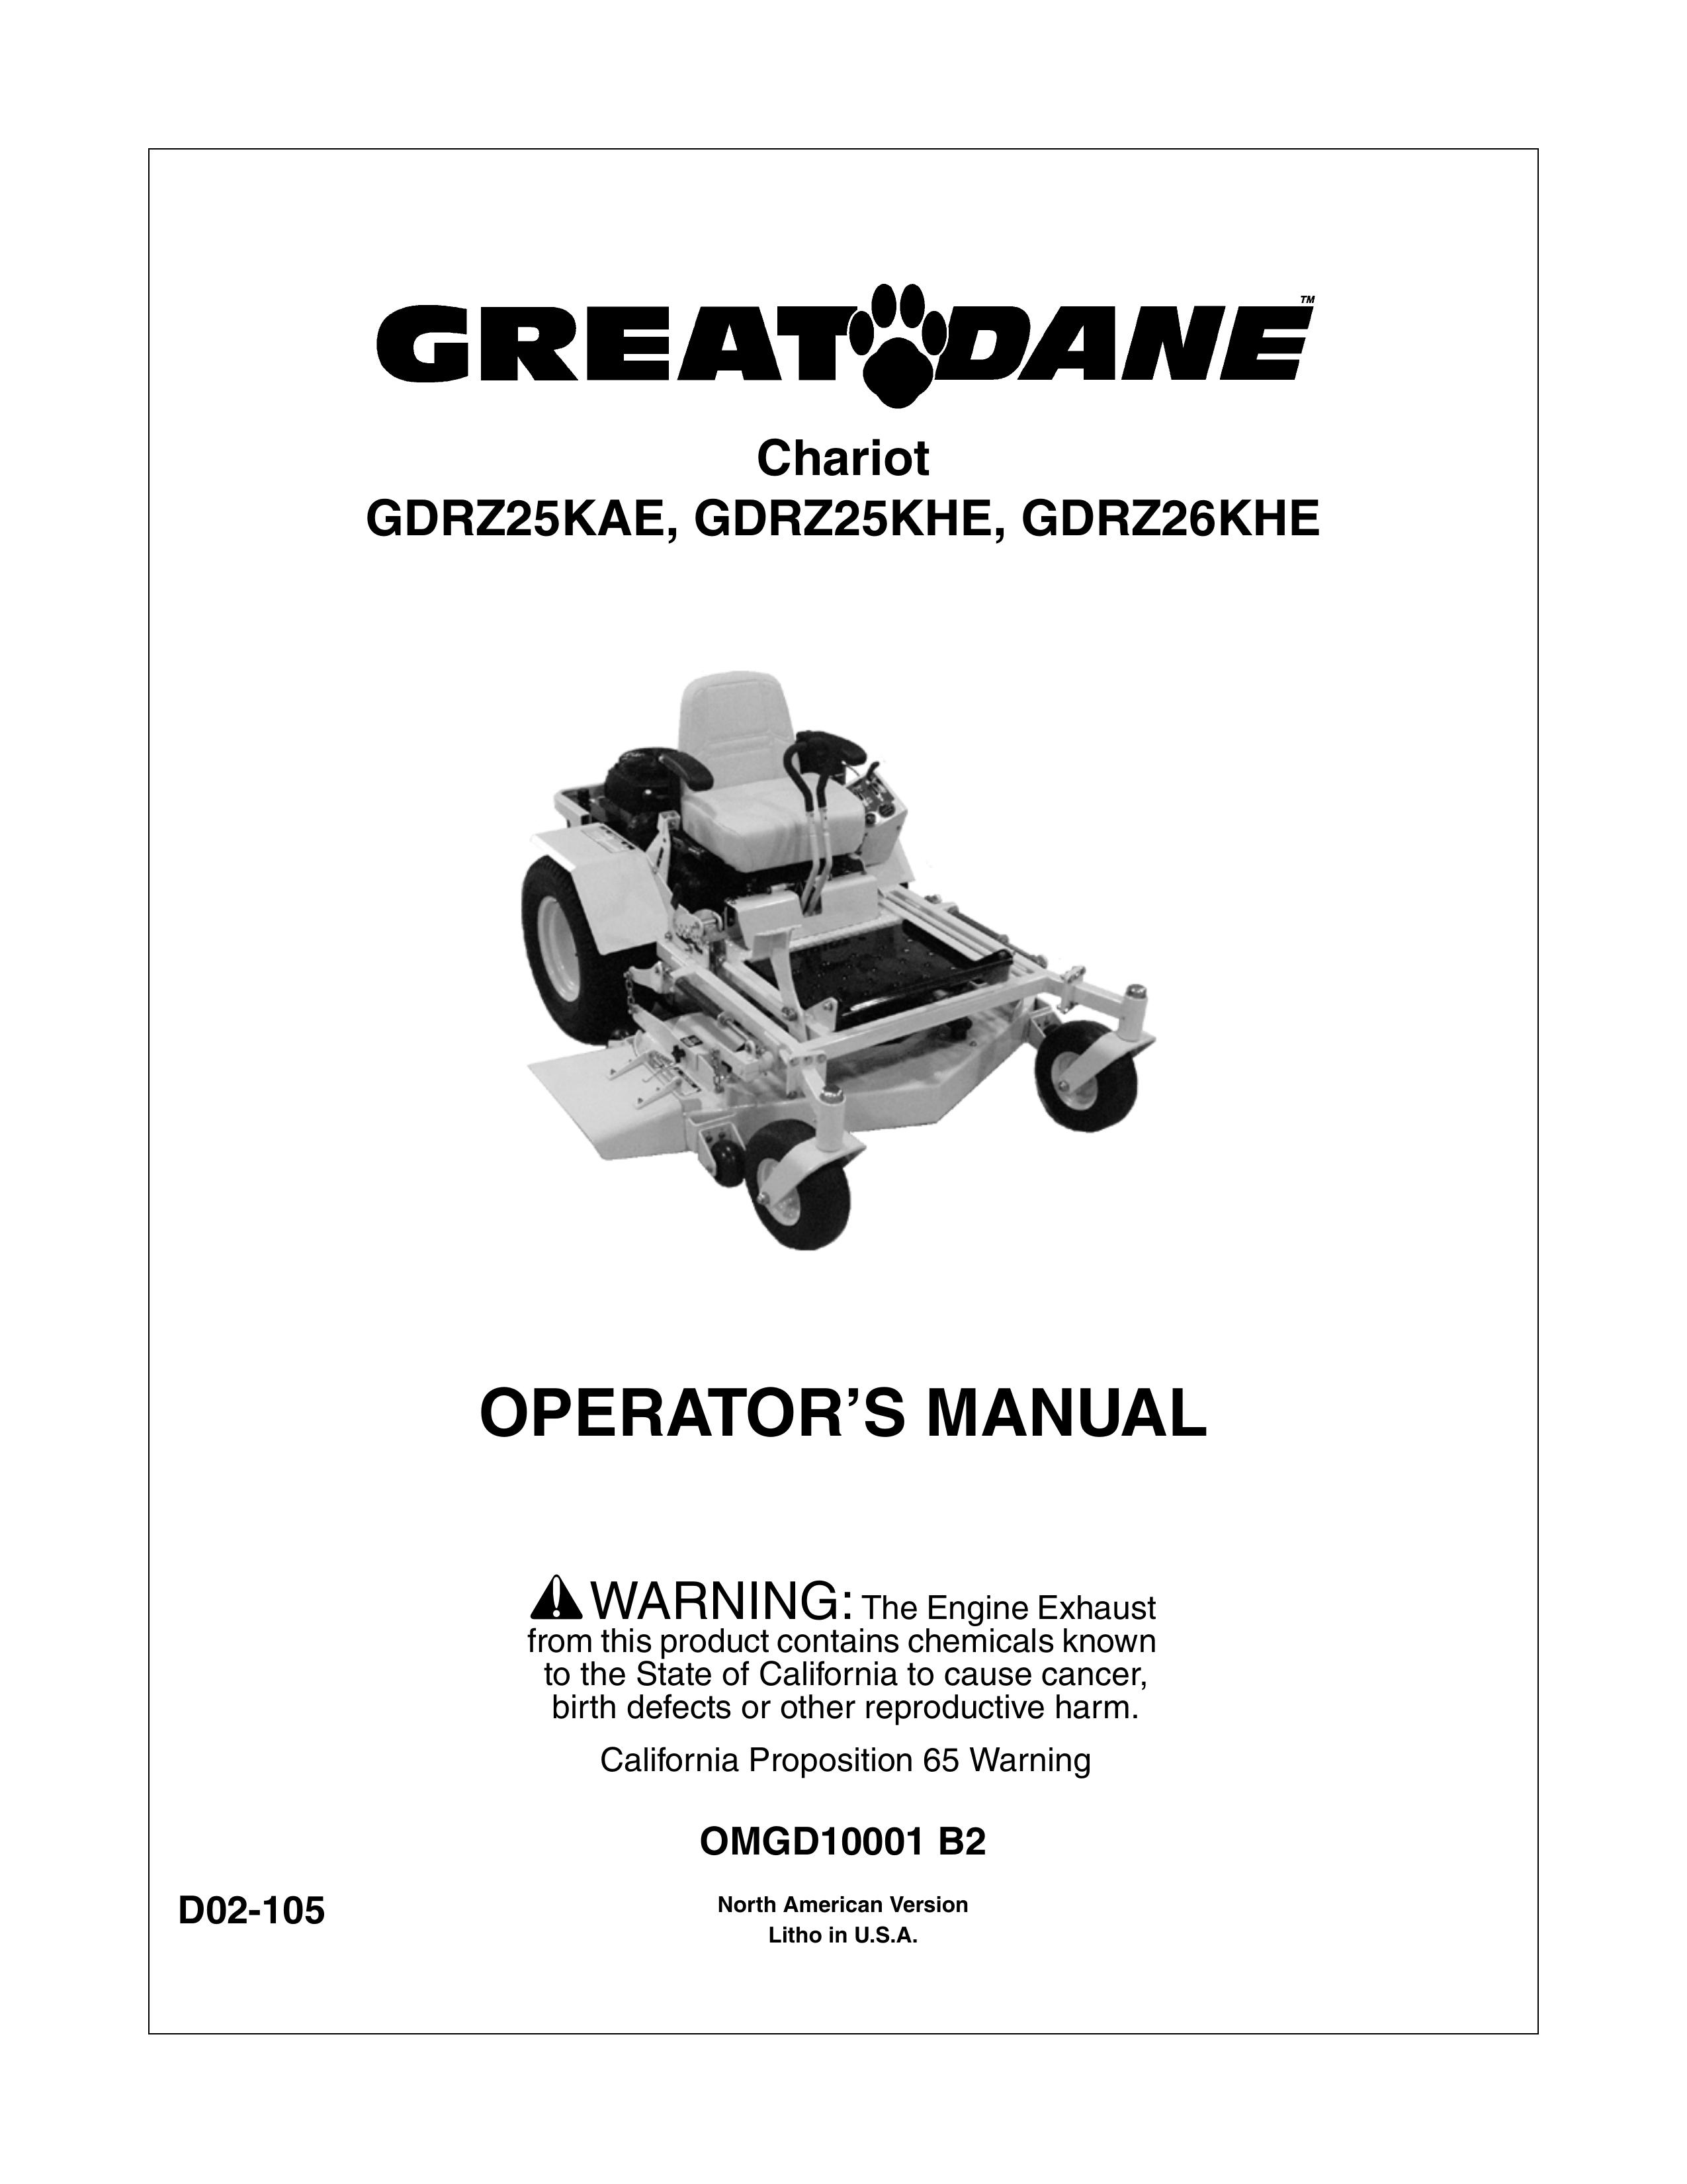 Great Dane GDRZ26KHE Lawn Mower User Manual